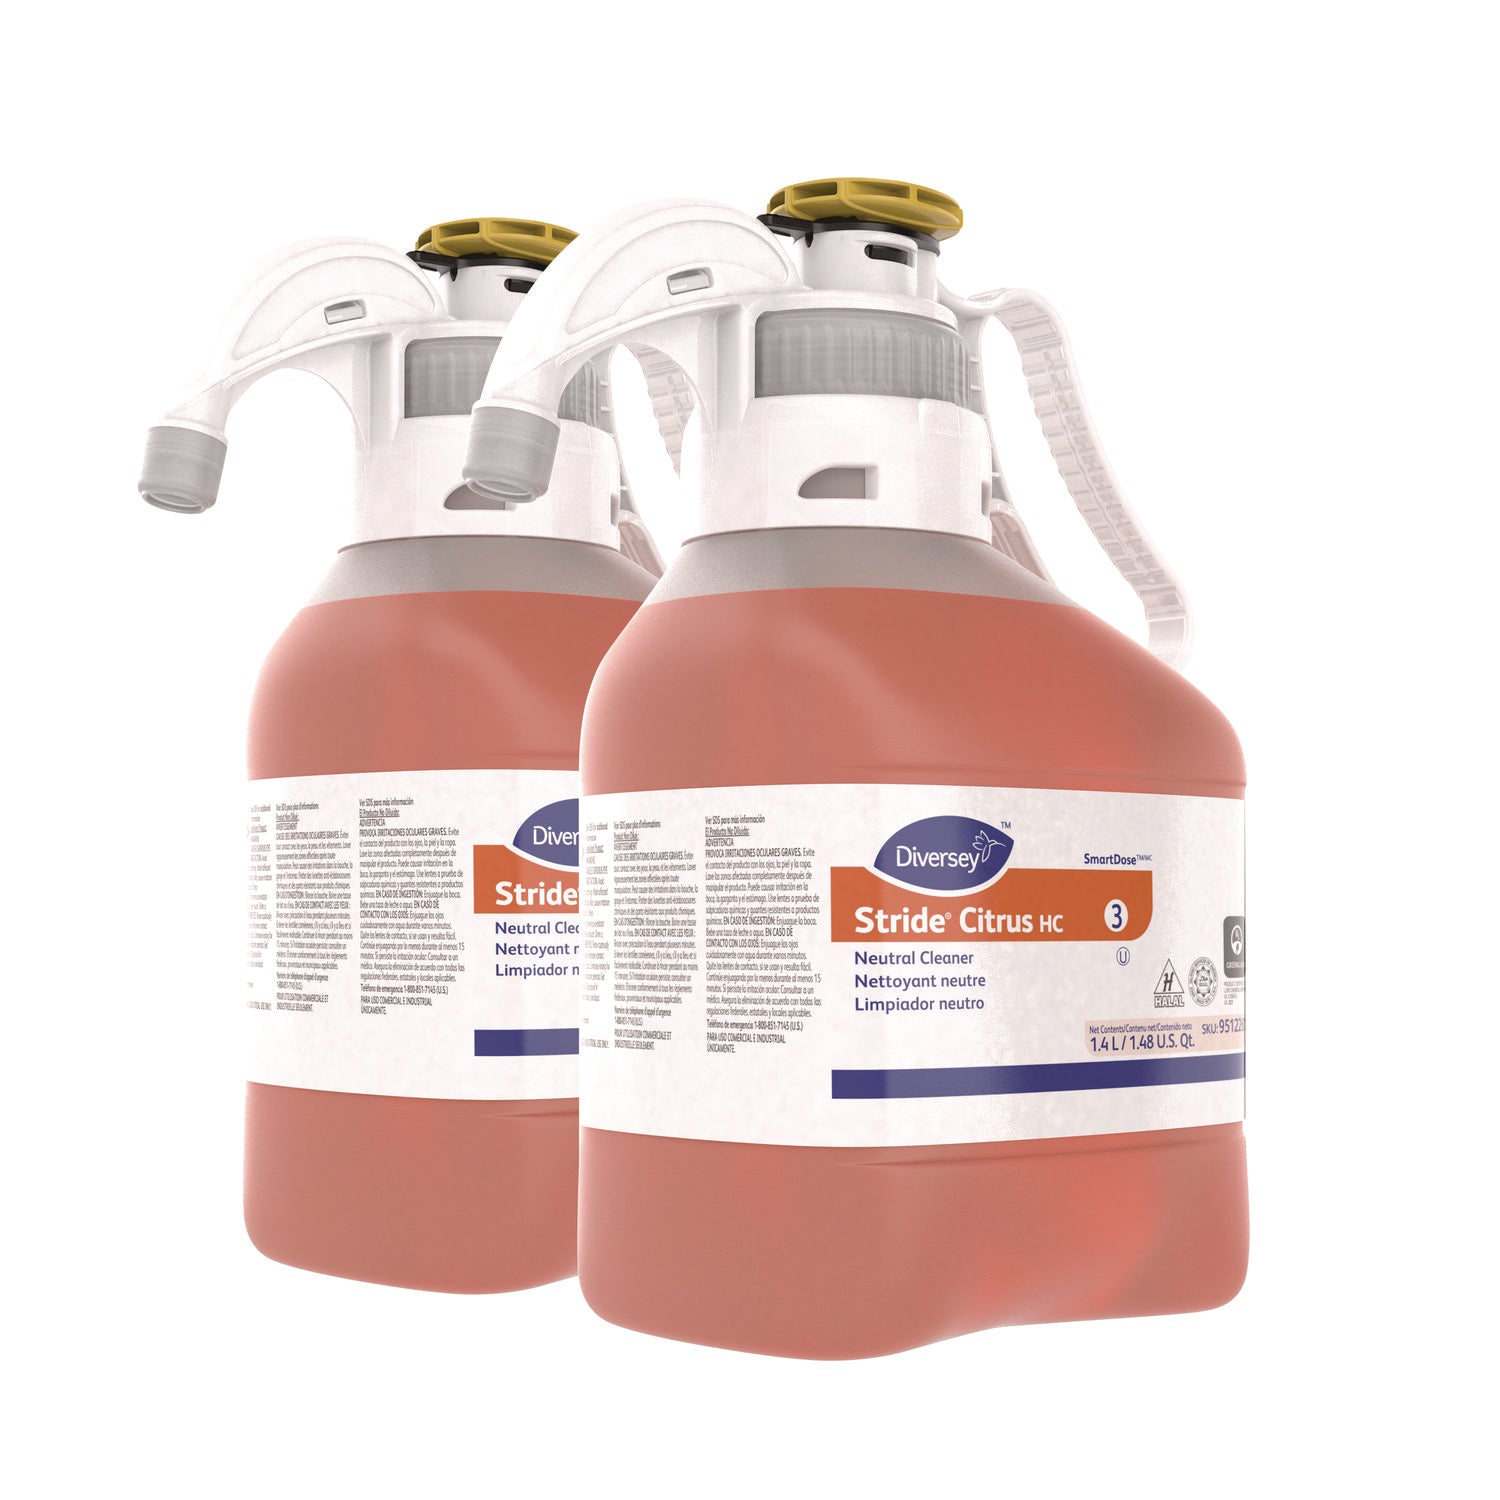 Stride Neutral Cleaner, Citrus Scent, 1.4 mL, 2 Bottles/Carton - 1